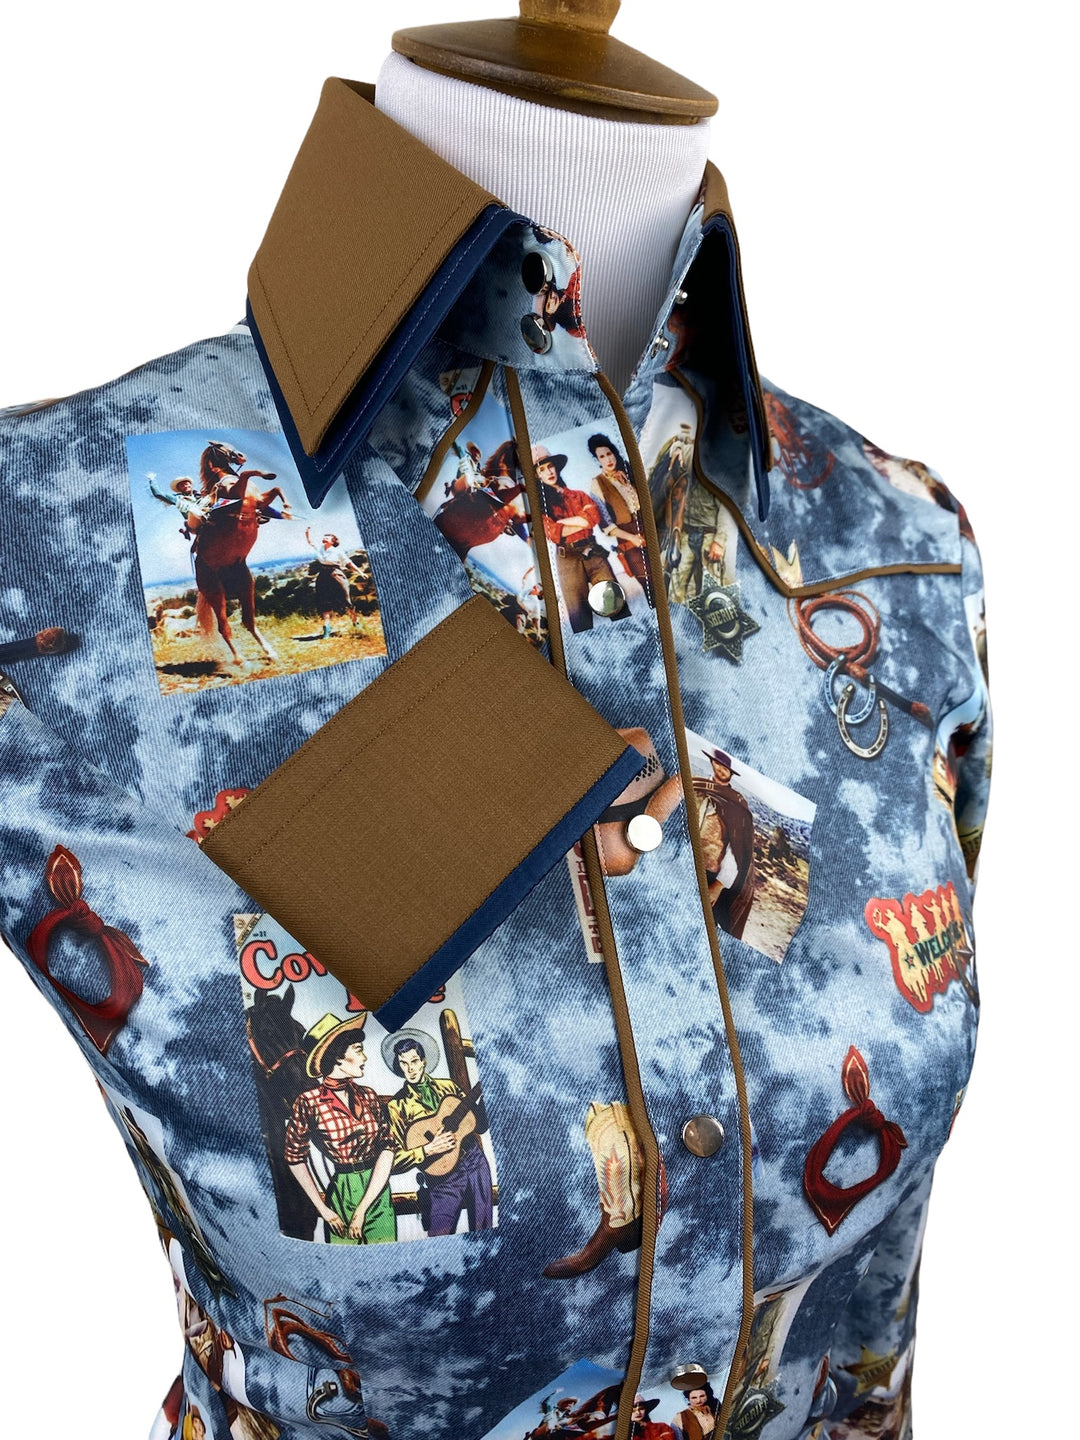 The Dallas Western Shirt (Original Style)